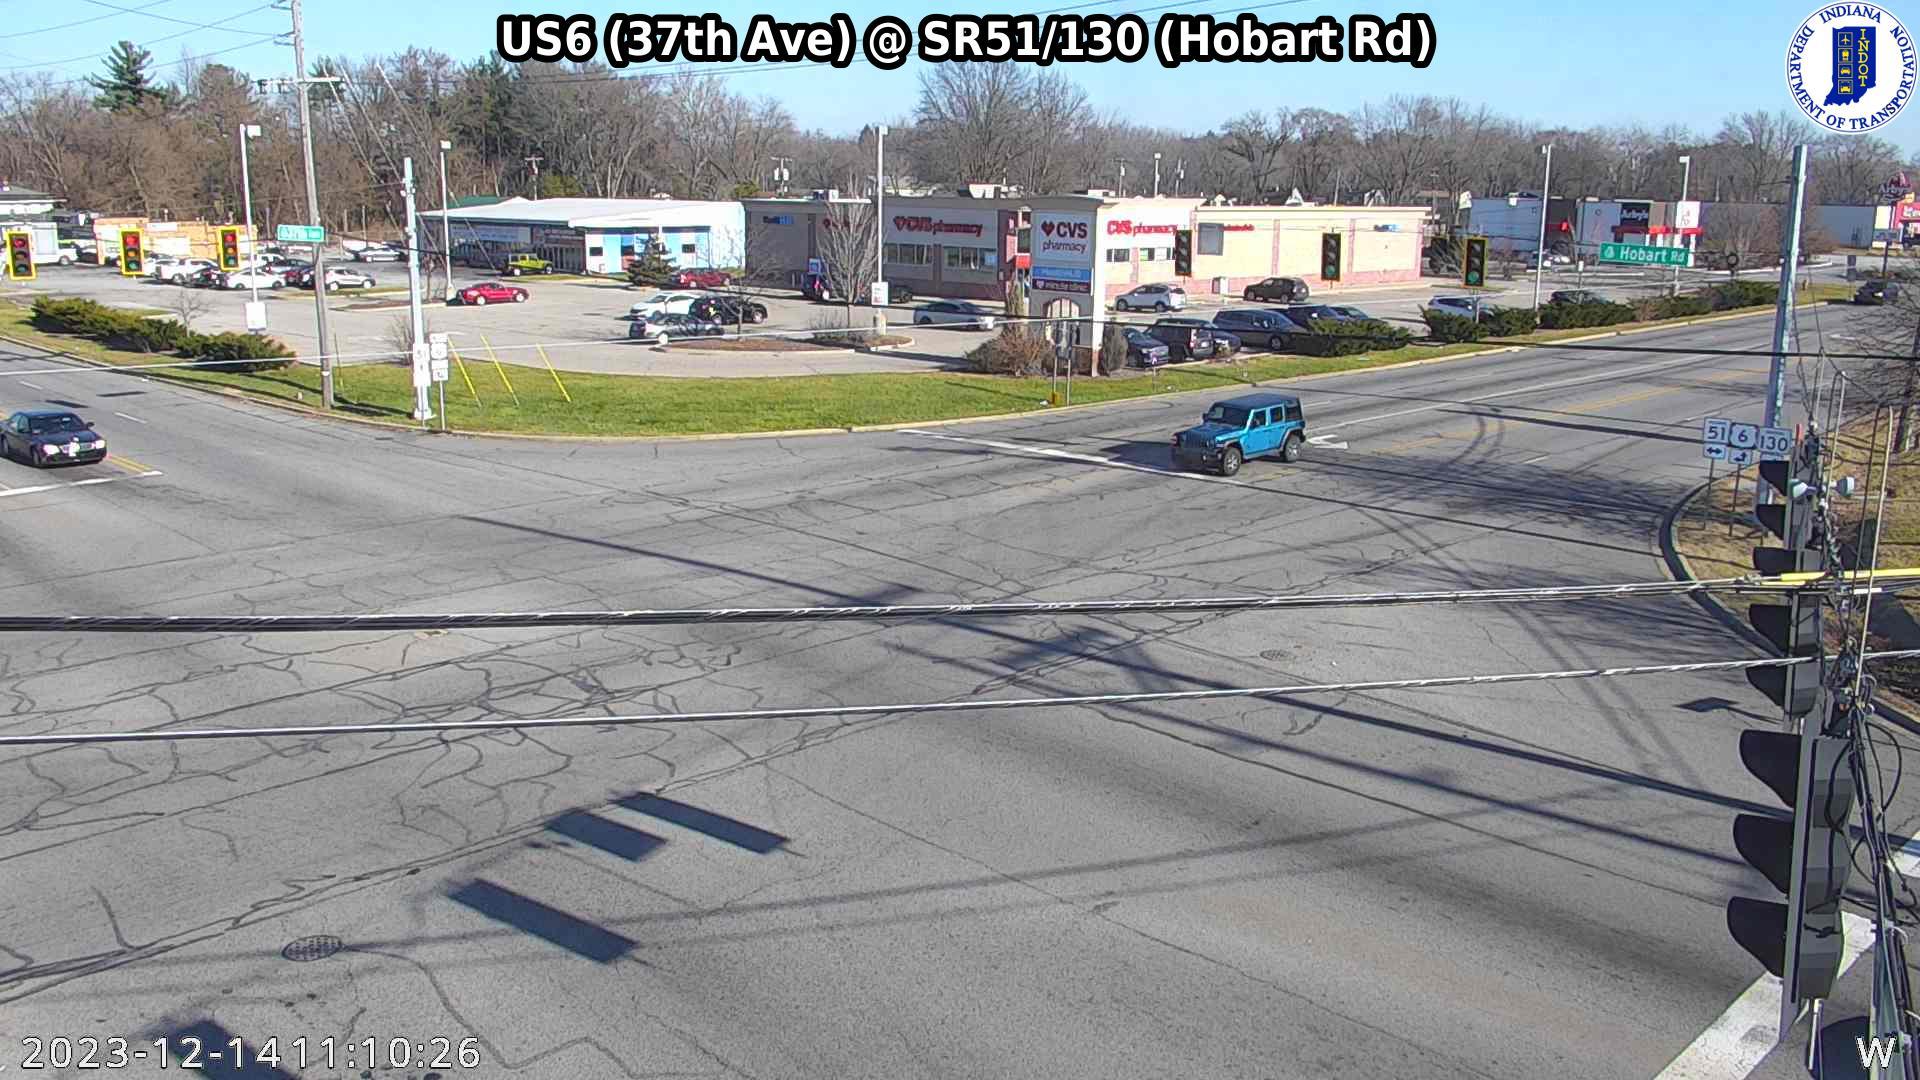 Traffic Cam Hobart: SIGNAL: US6 (37th Ave) @ SR51/130 - Rd Player